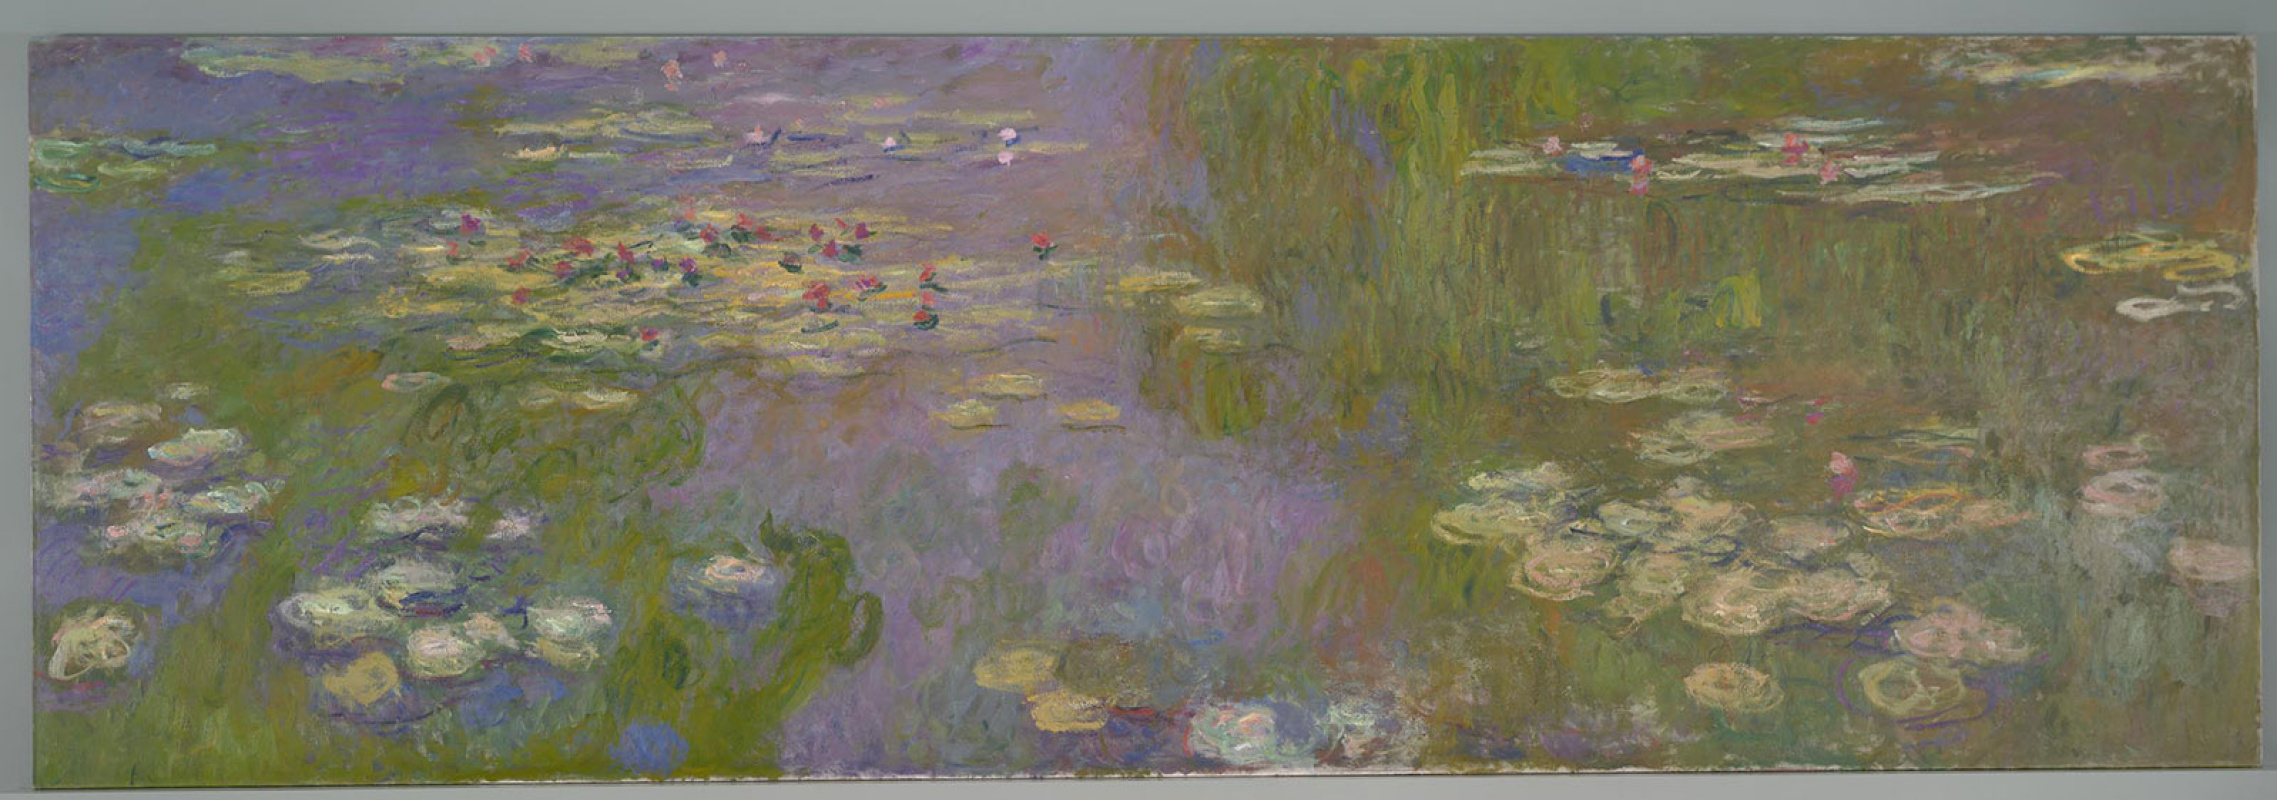 Картина «Водяные лилии», Клод Моне — описание